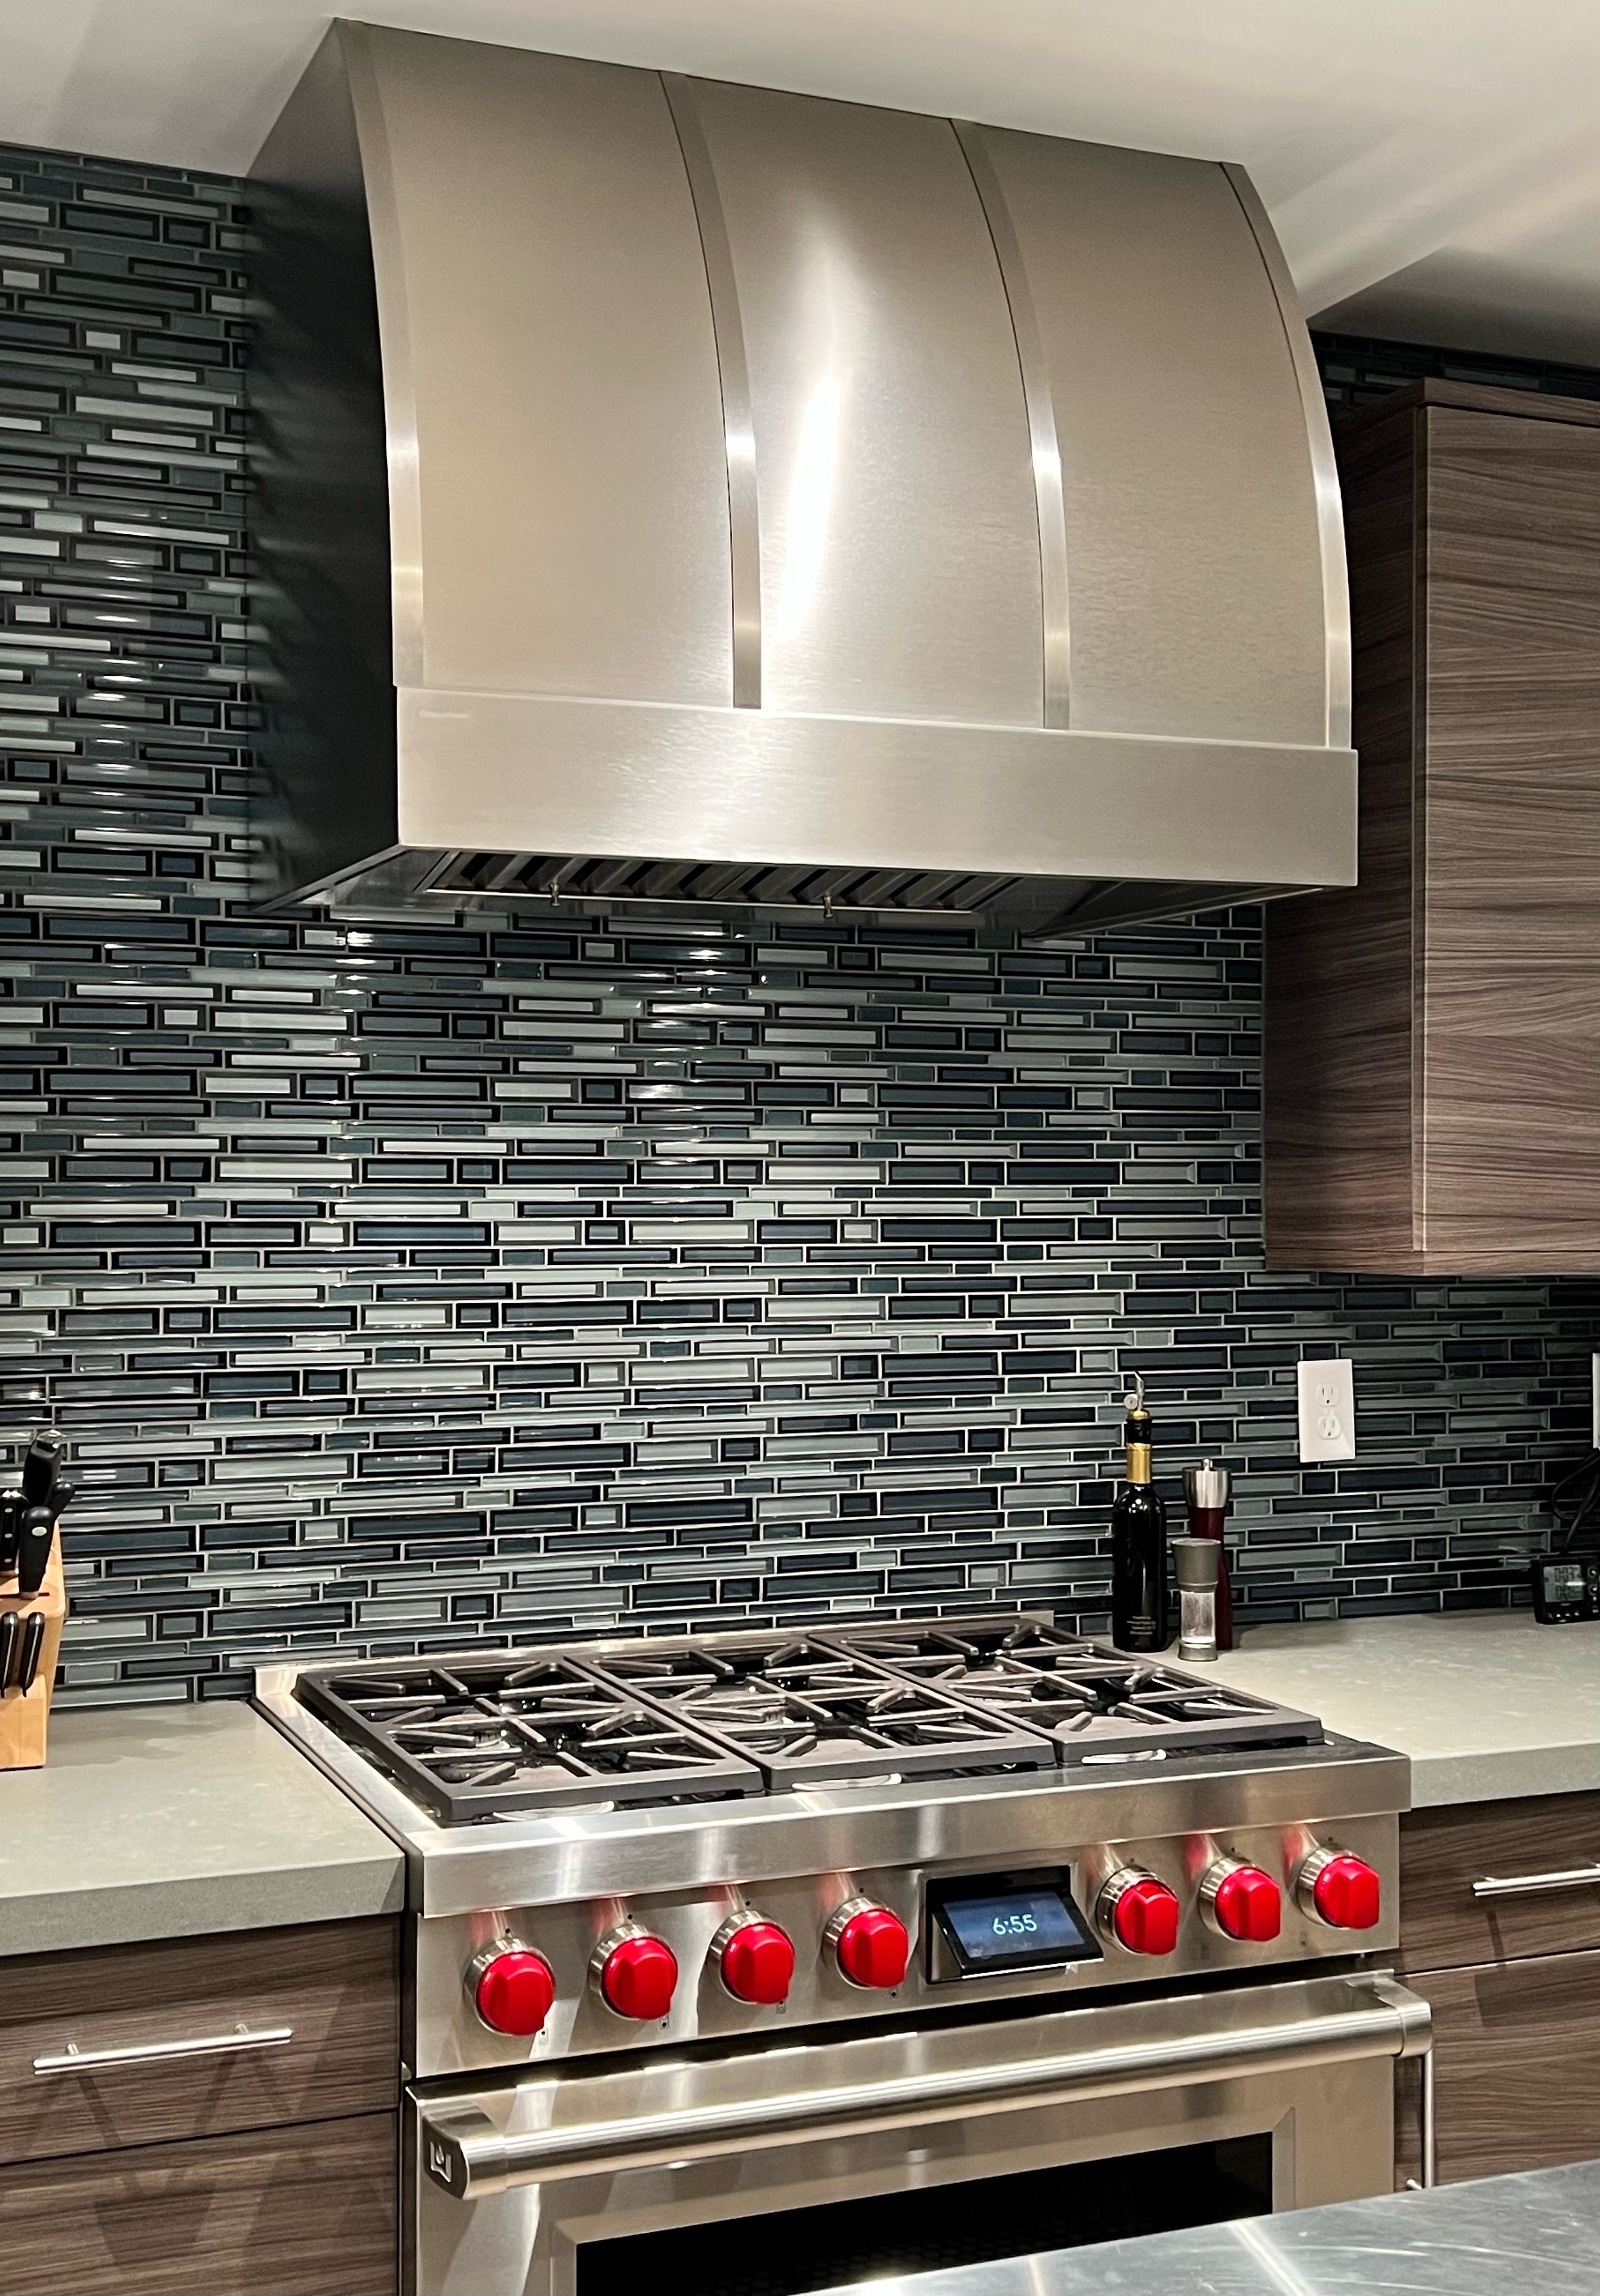 Stylish range hood options kitchen design idea incorporating classic kitchen planning, white kitchen cabinets, marble kitchen countertops, and marble backsplash